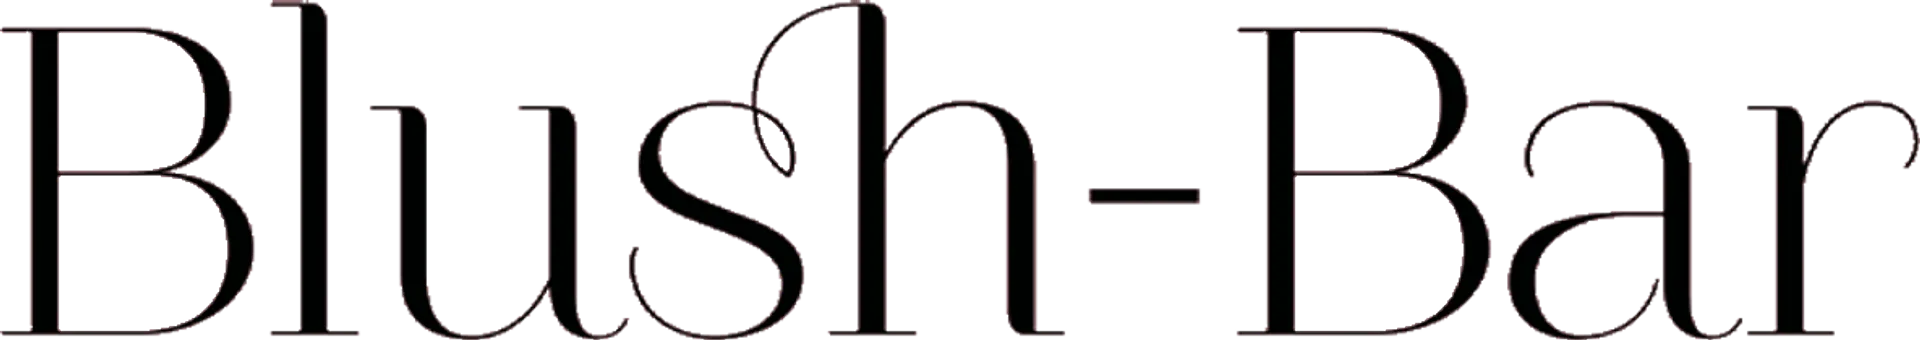 BLUSH-BAR logo de catálogo